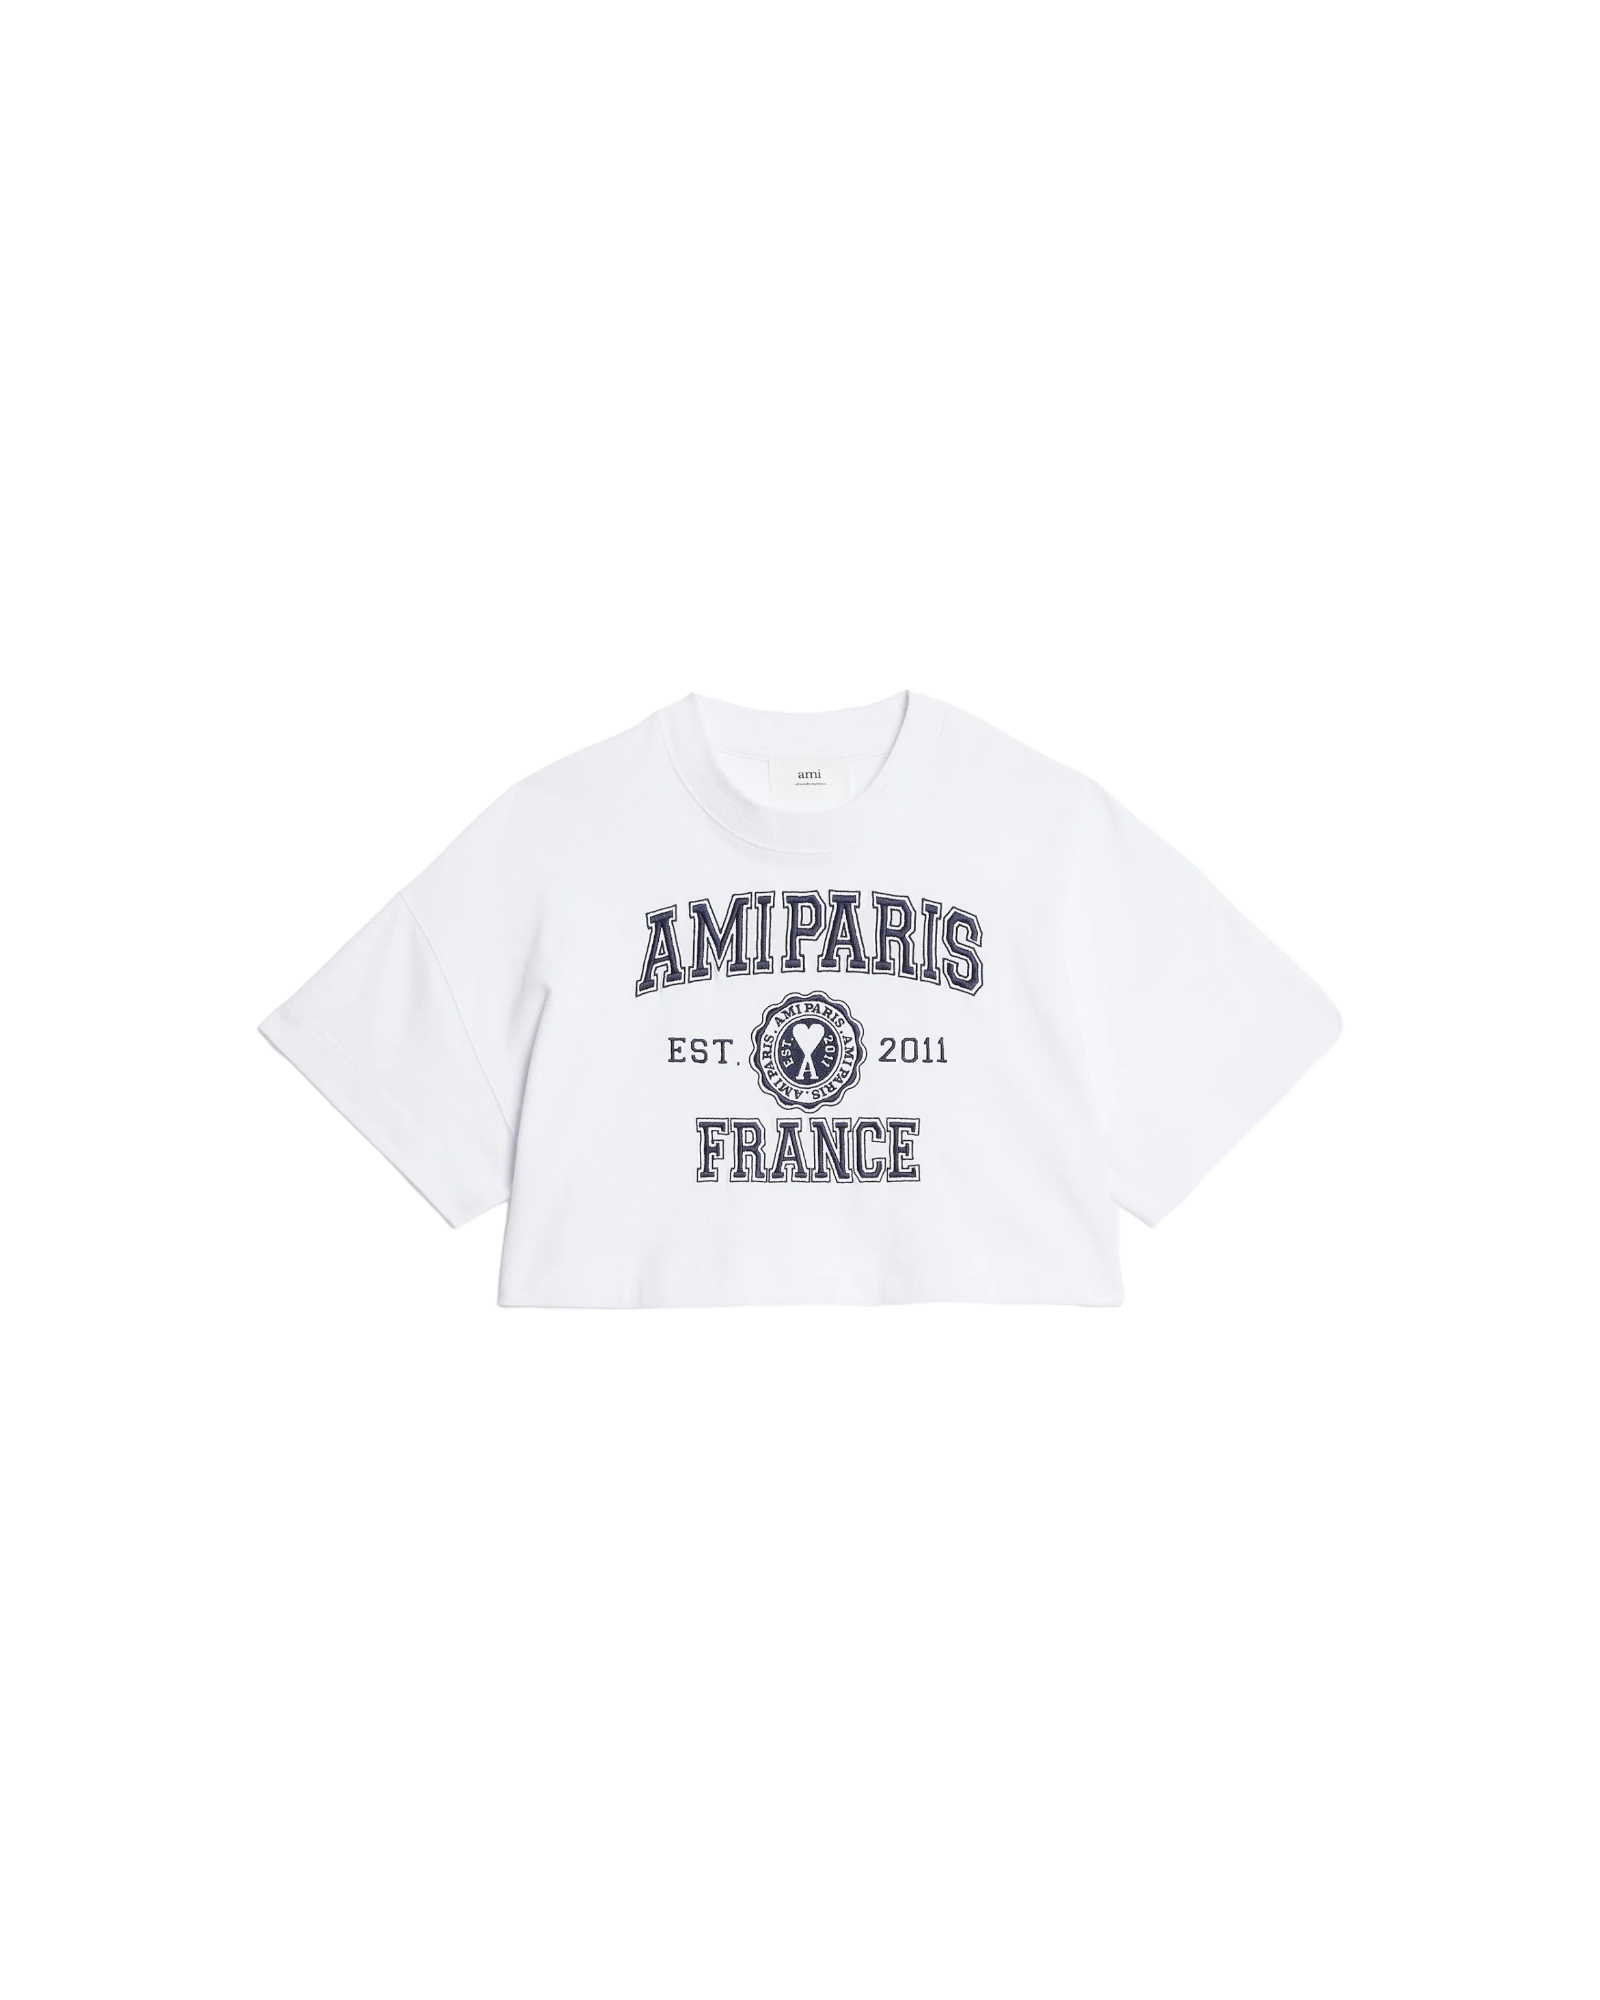 T-Shirt cropped France AMI PARIS, France, AMI PARIS